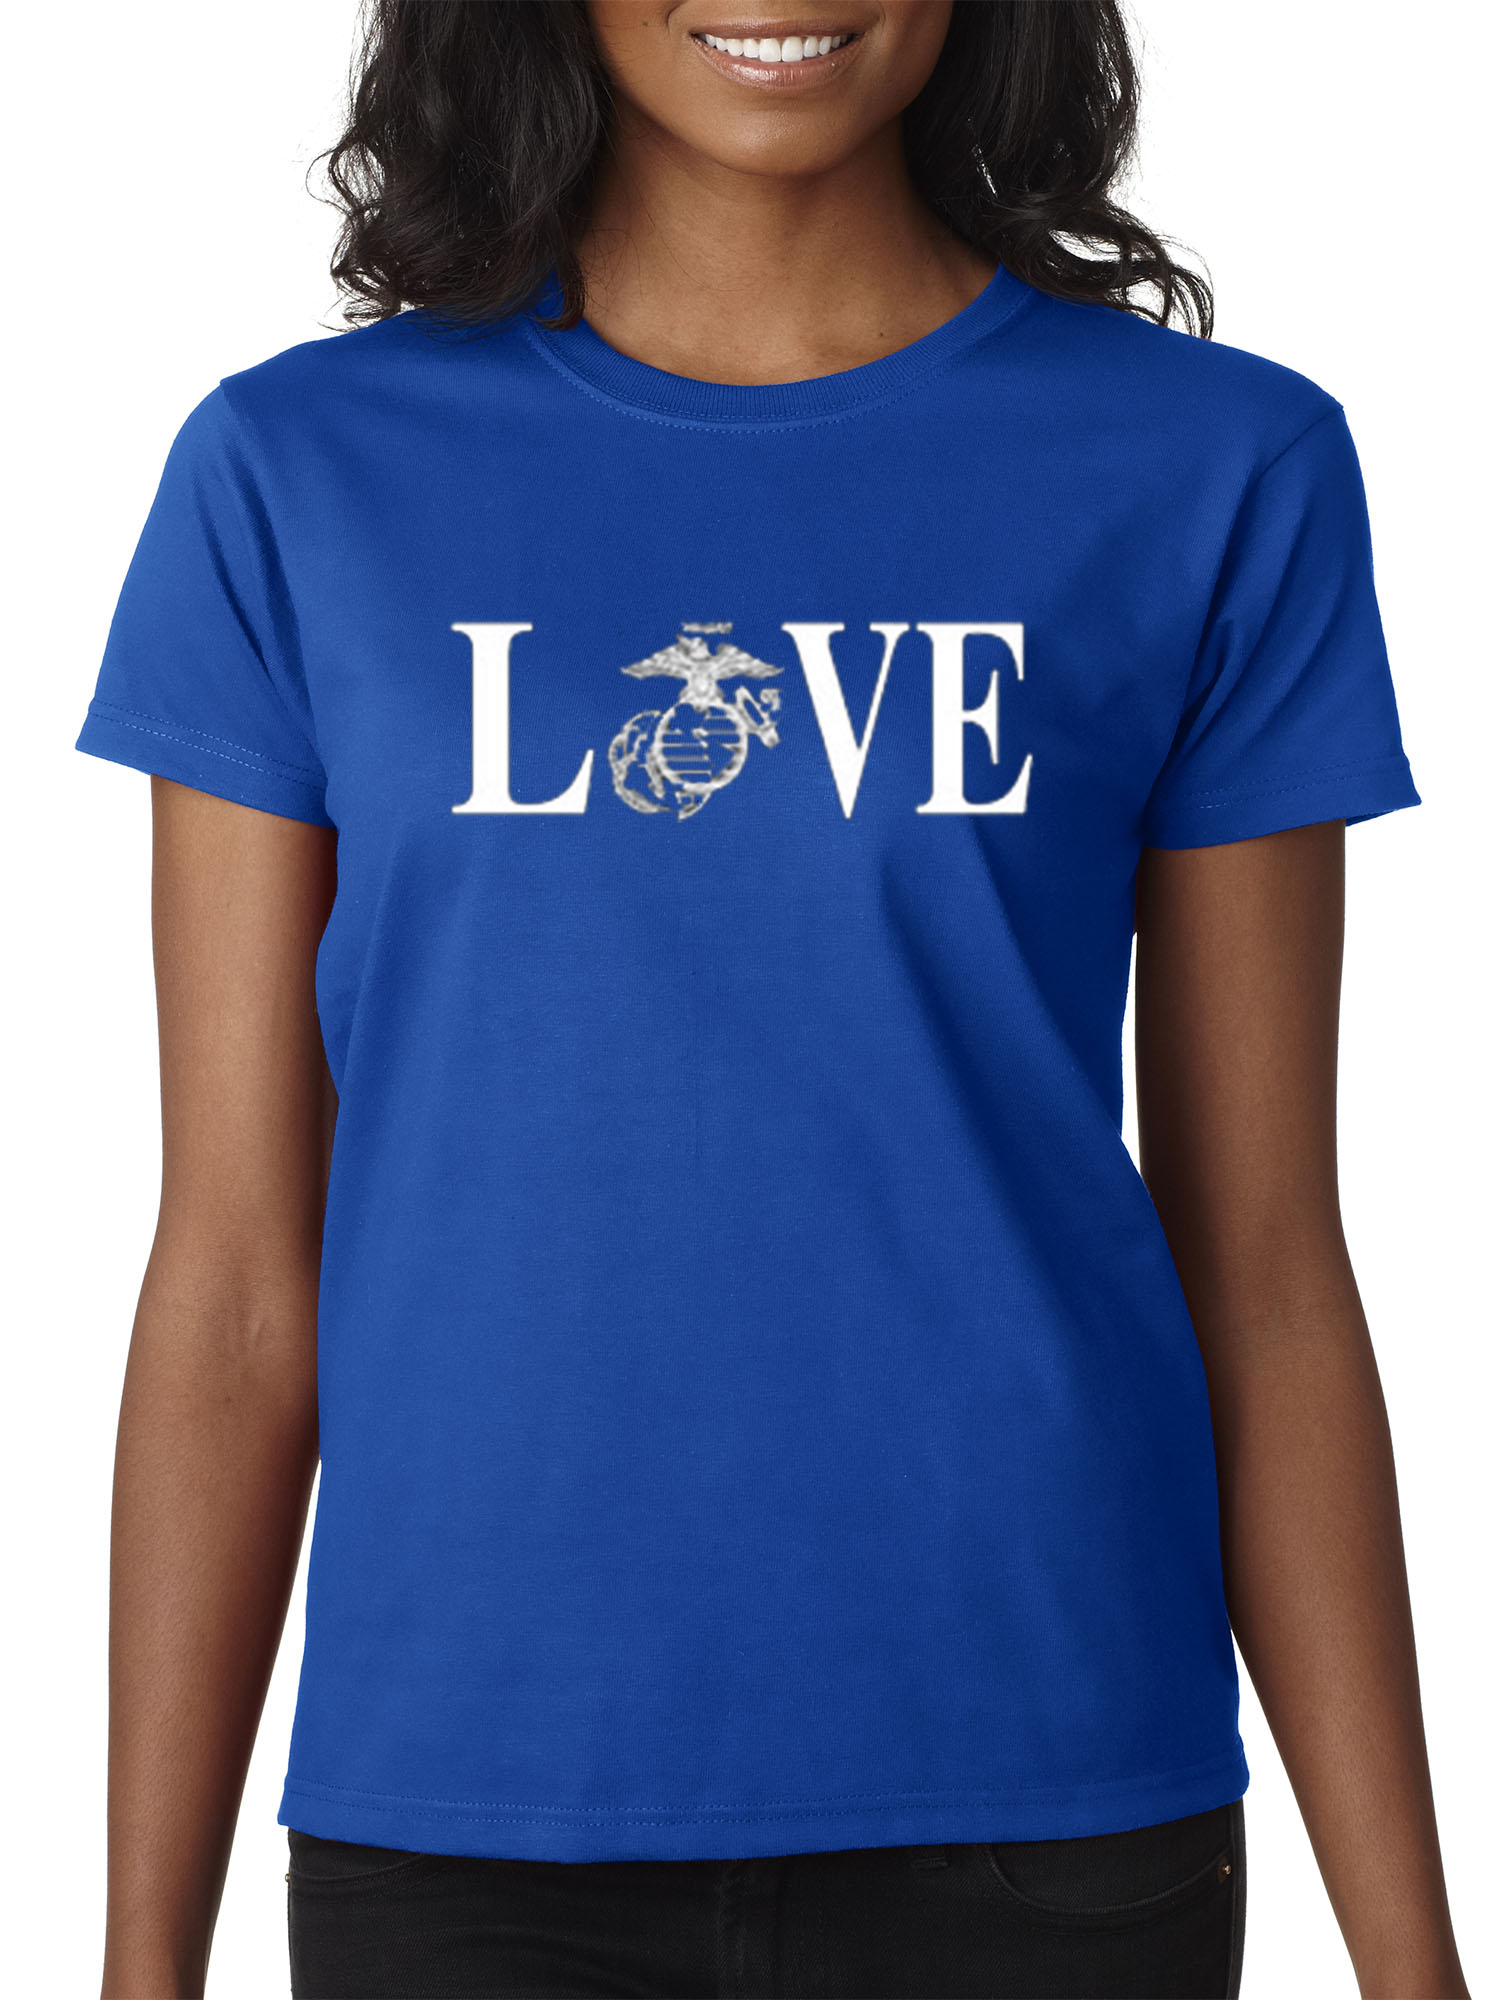 New Way 145 - Women's T-Shirt Love Marines USMC Military USA Large Royal Blue